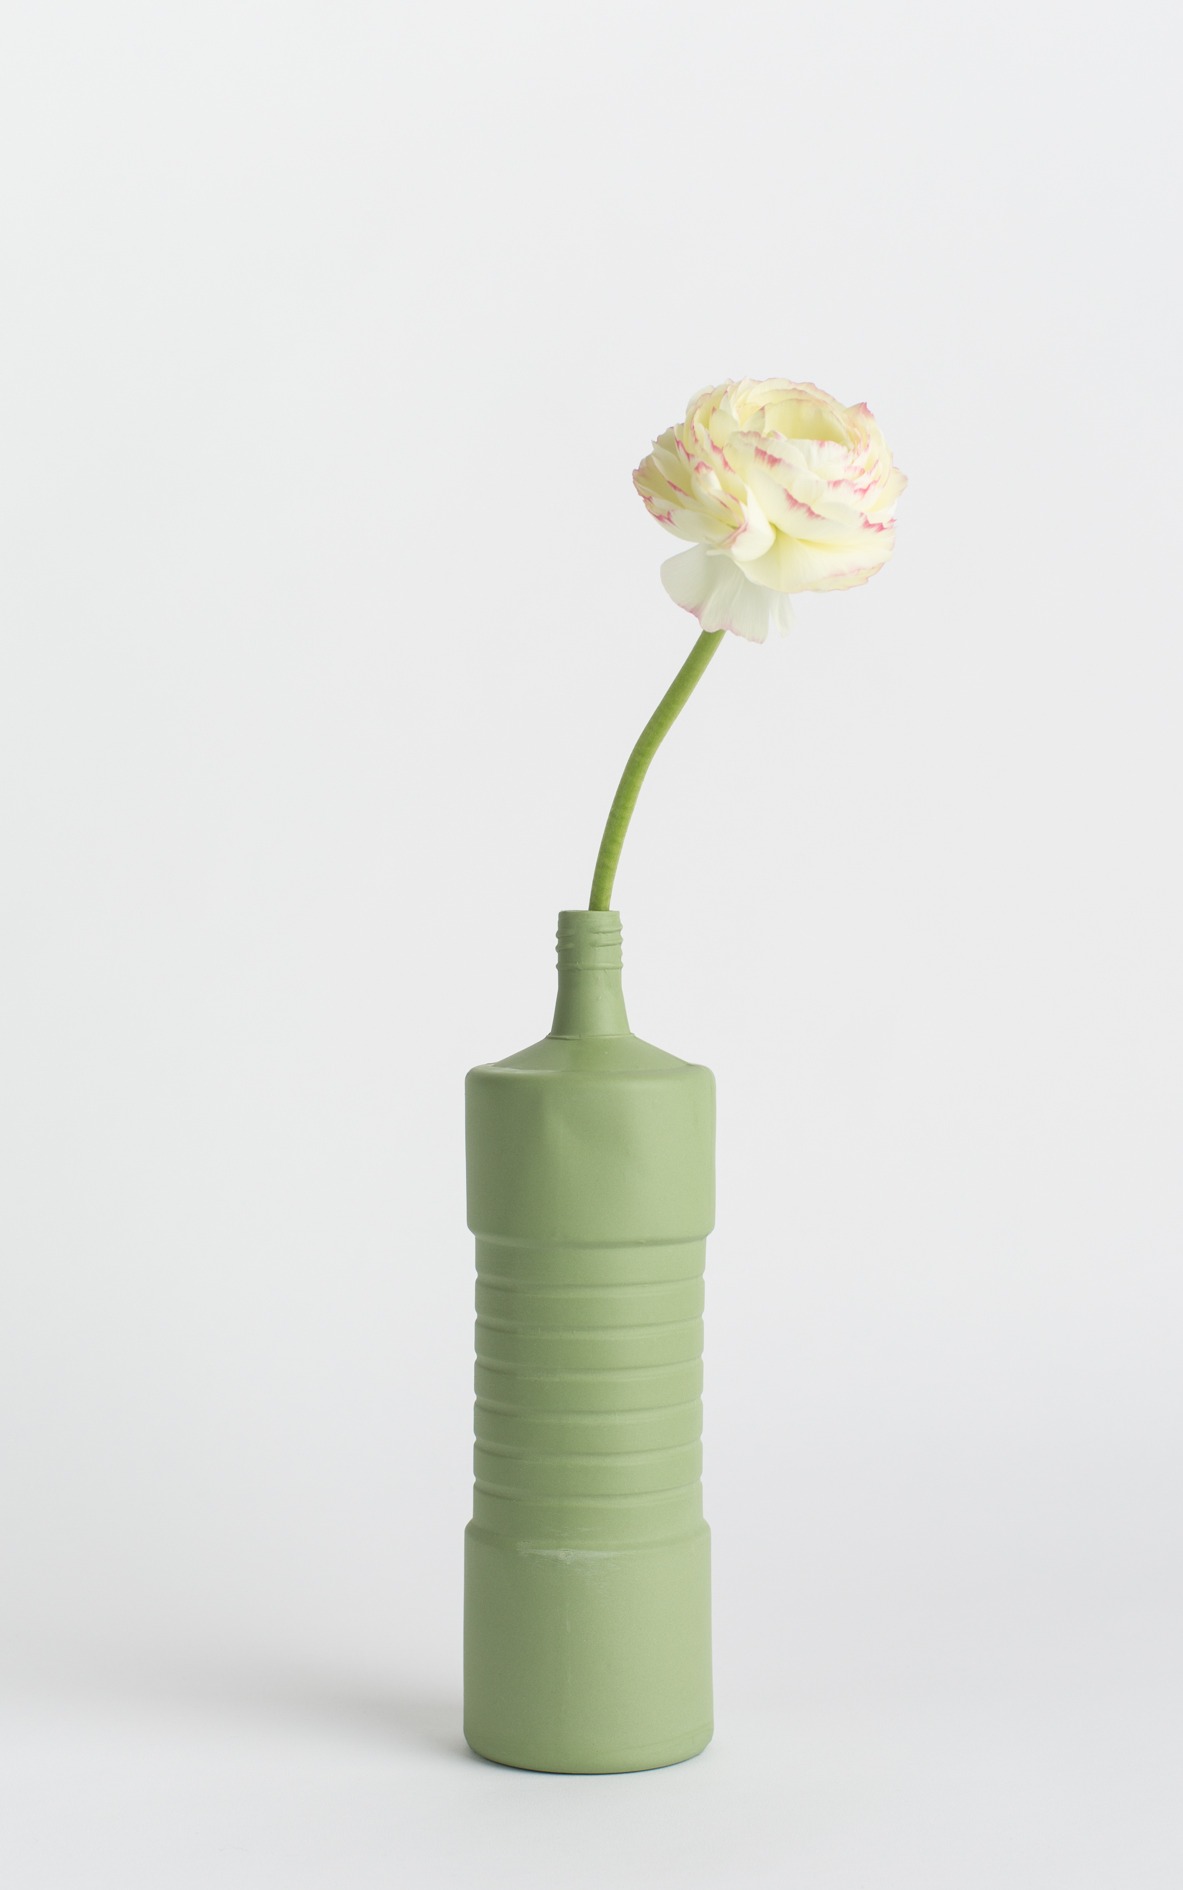 bottle vase #5 dark green with flower